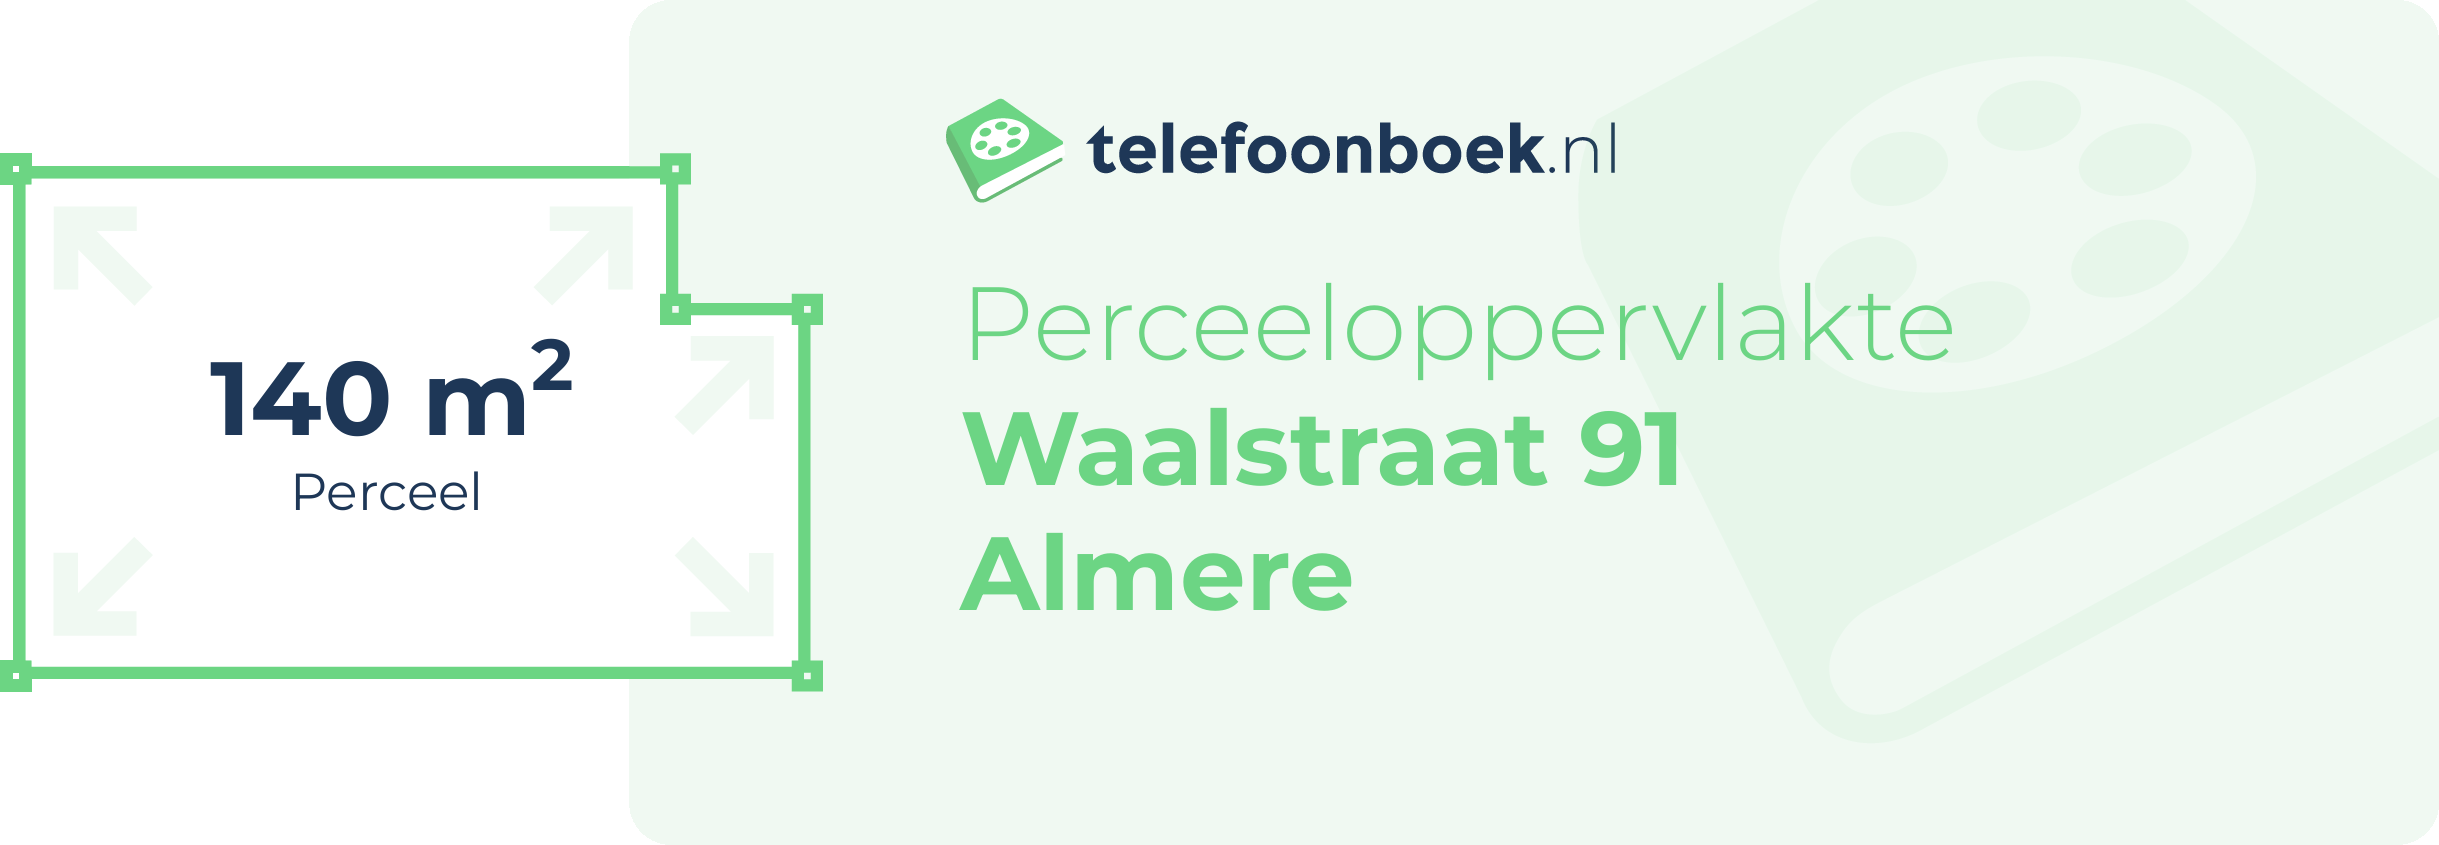 Perceeloppervlakte Waalstraat 91 Almere